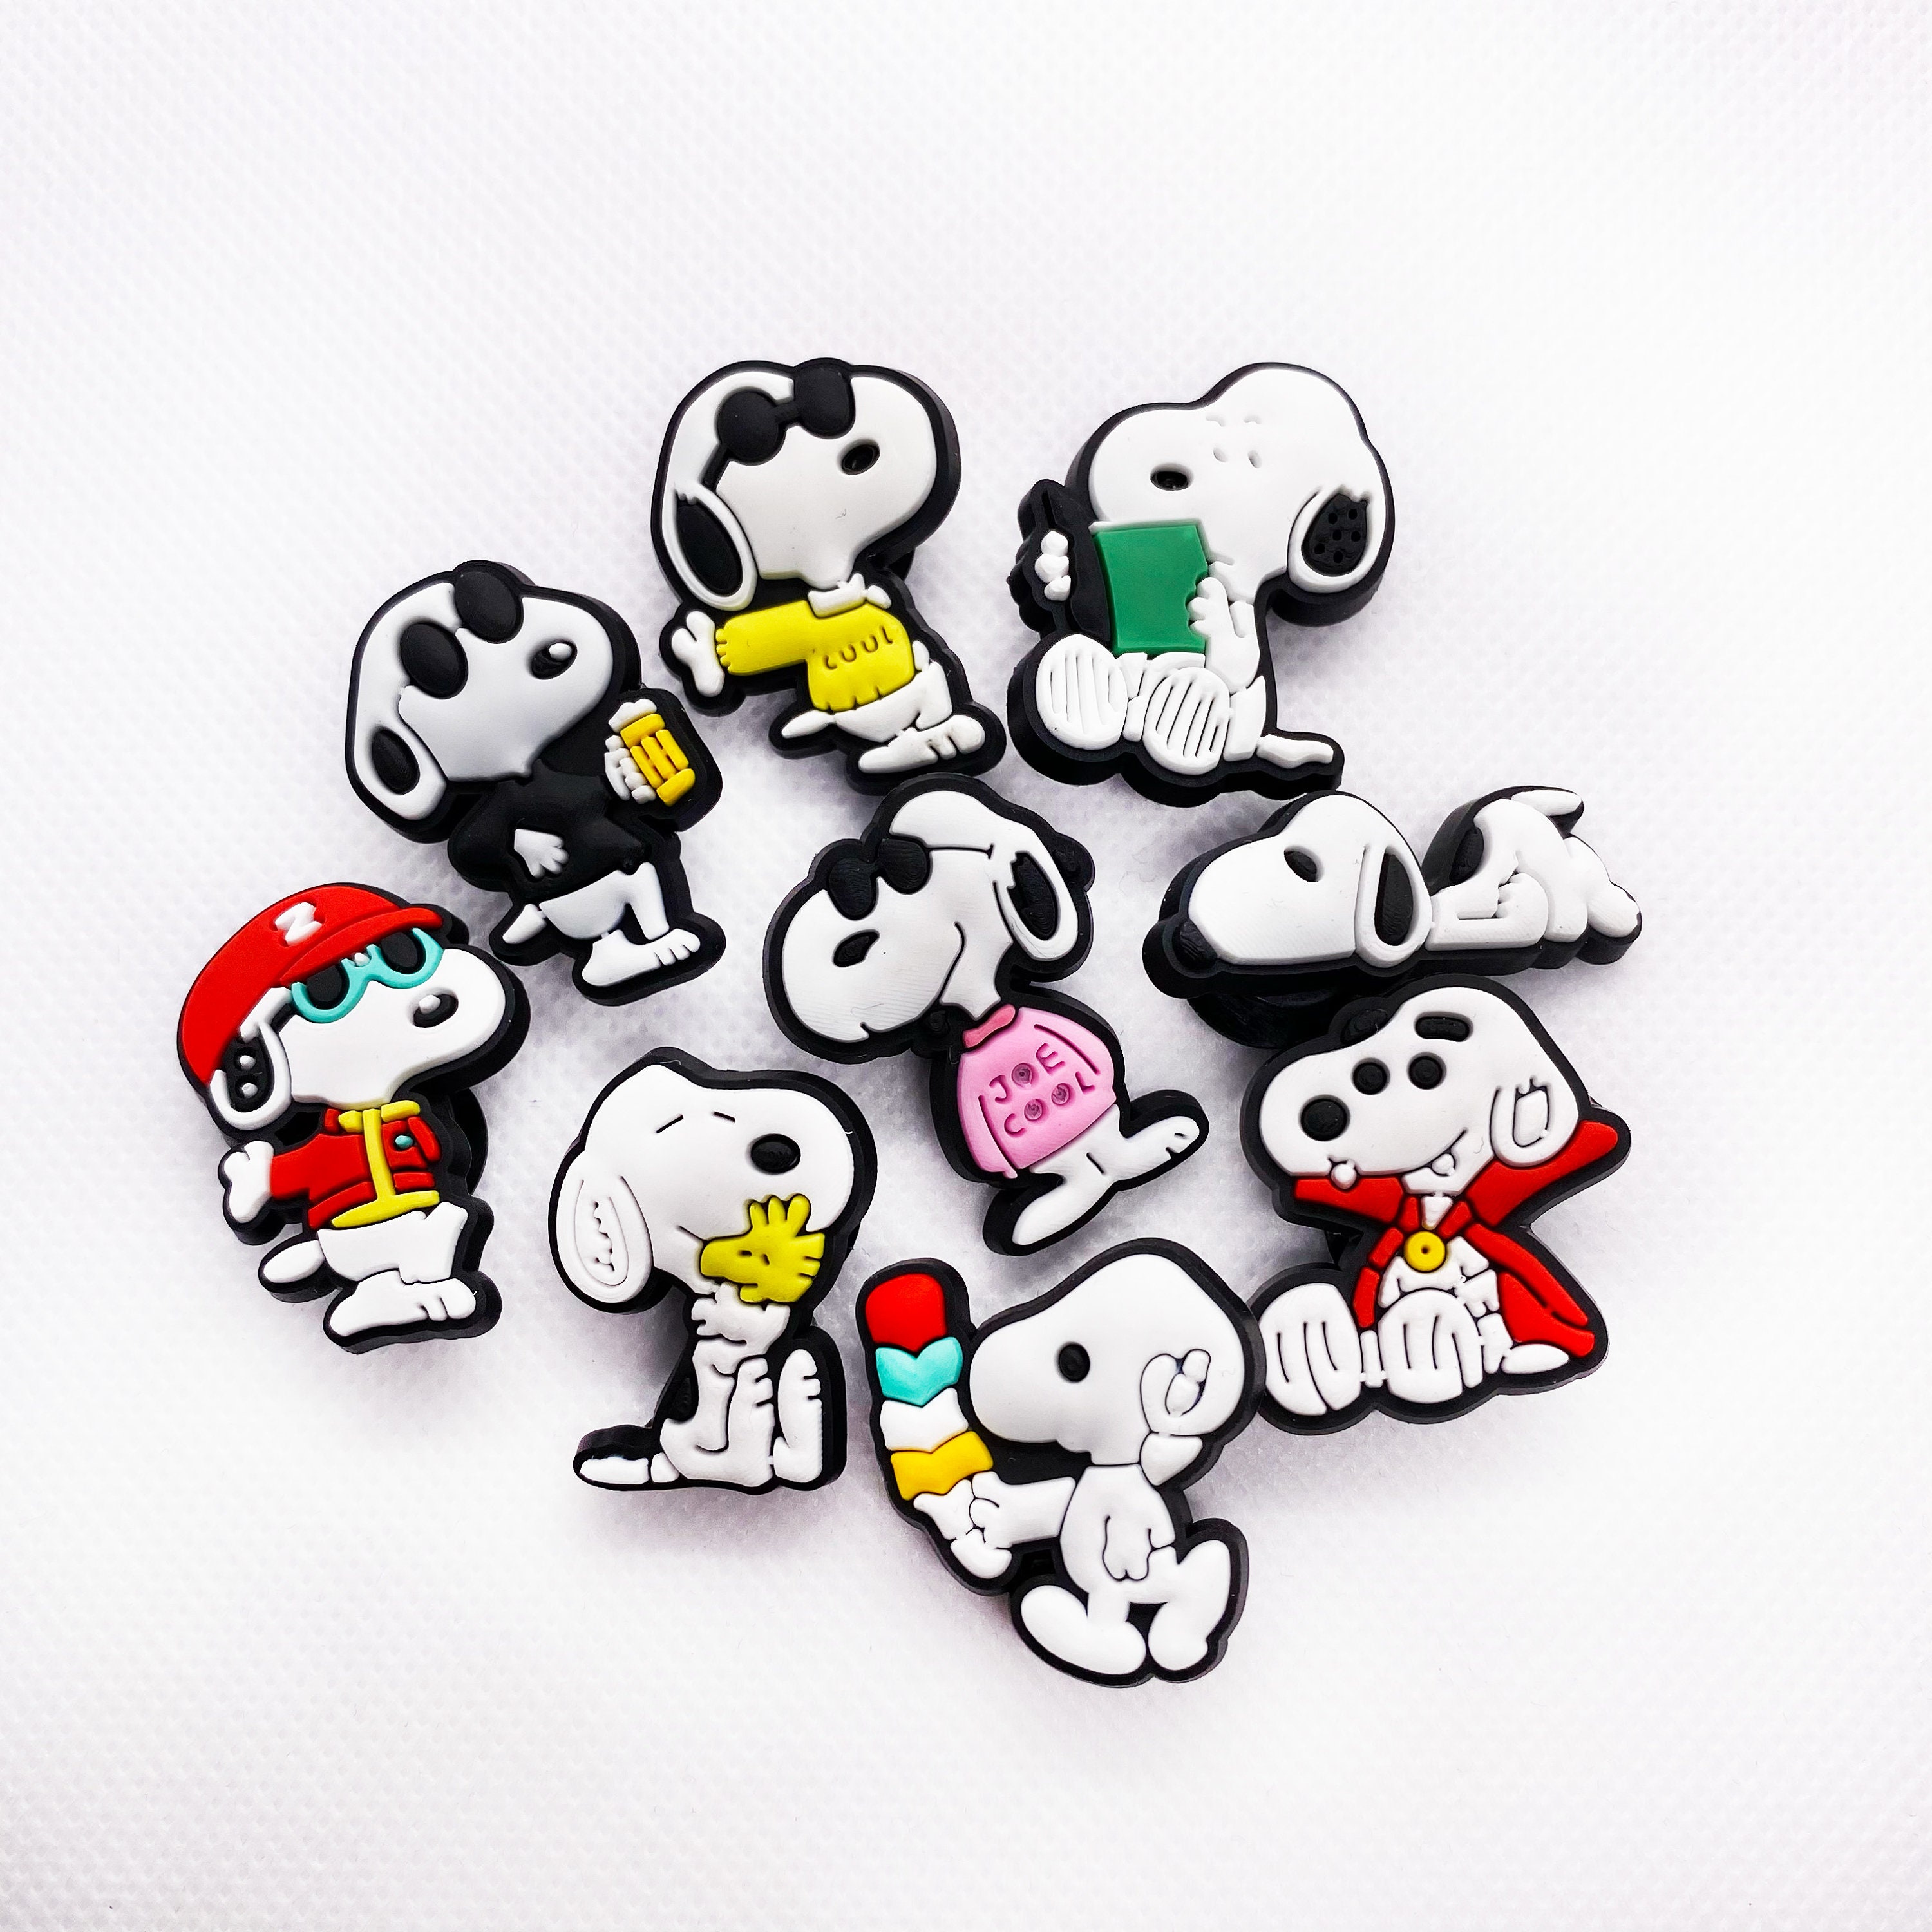 Aufkleber Verliebt in Snoopy